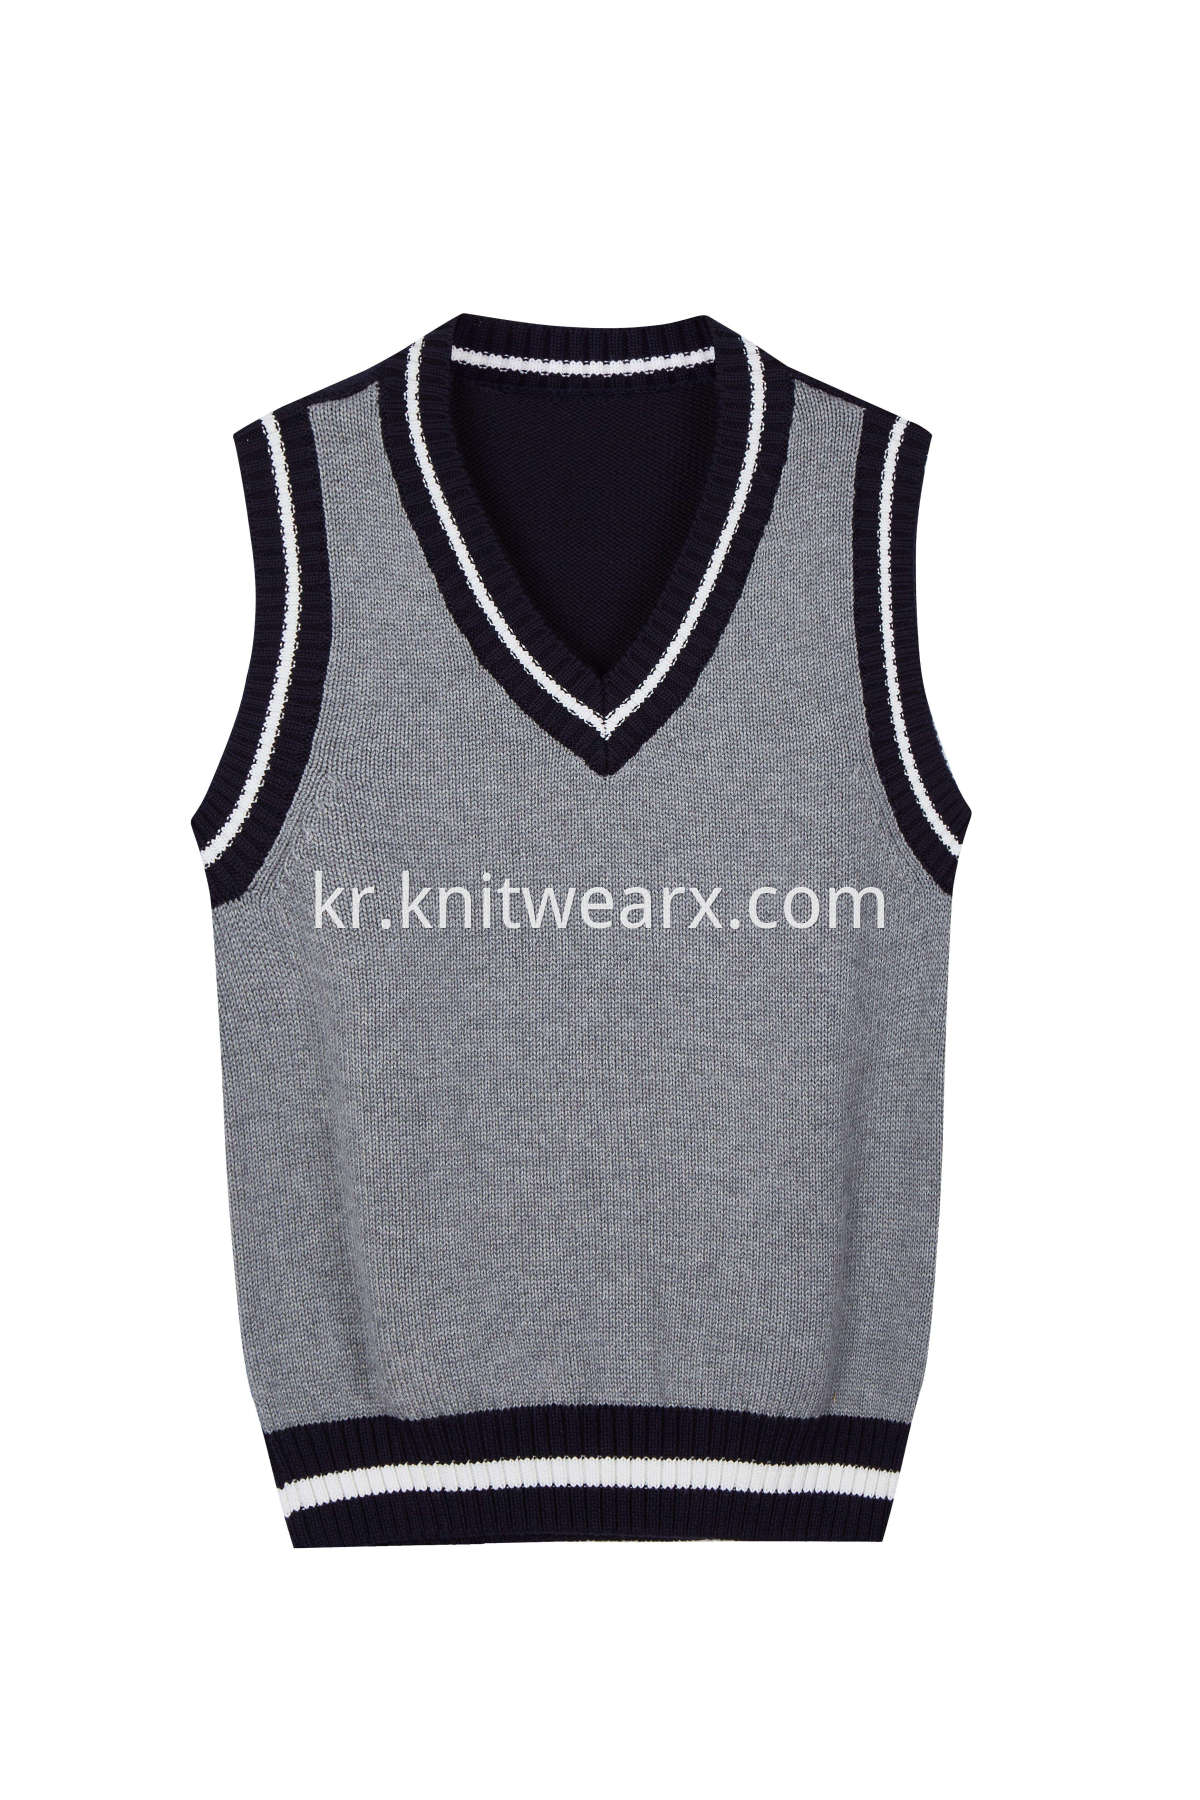 Kids's Sweater Vest Cotton V-Neck School Uniform Pullover Sweater